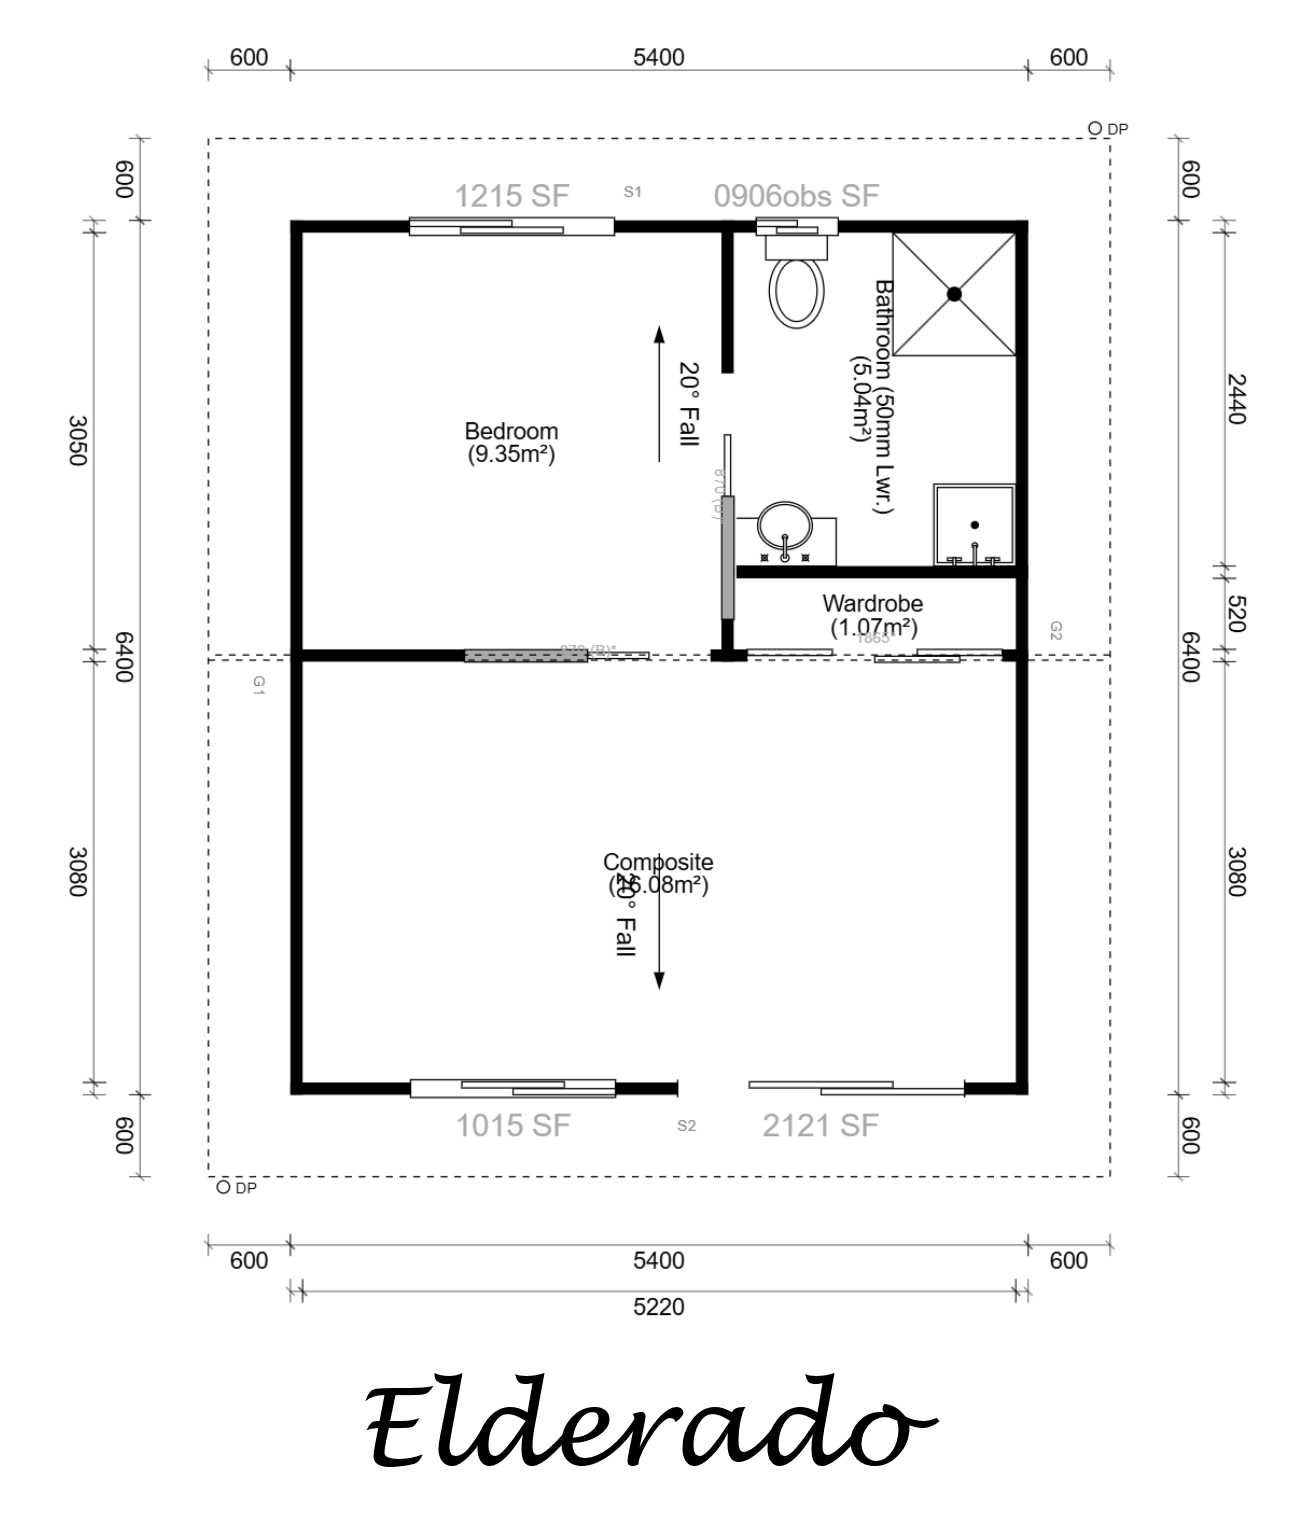 Eldorado floorplan image